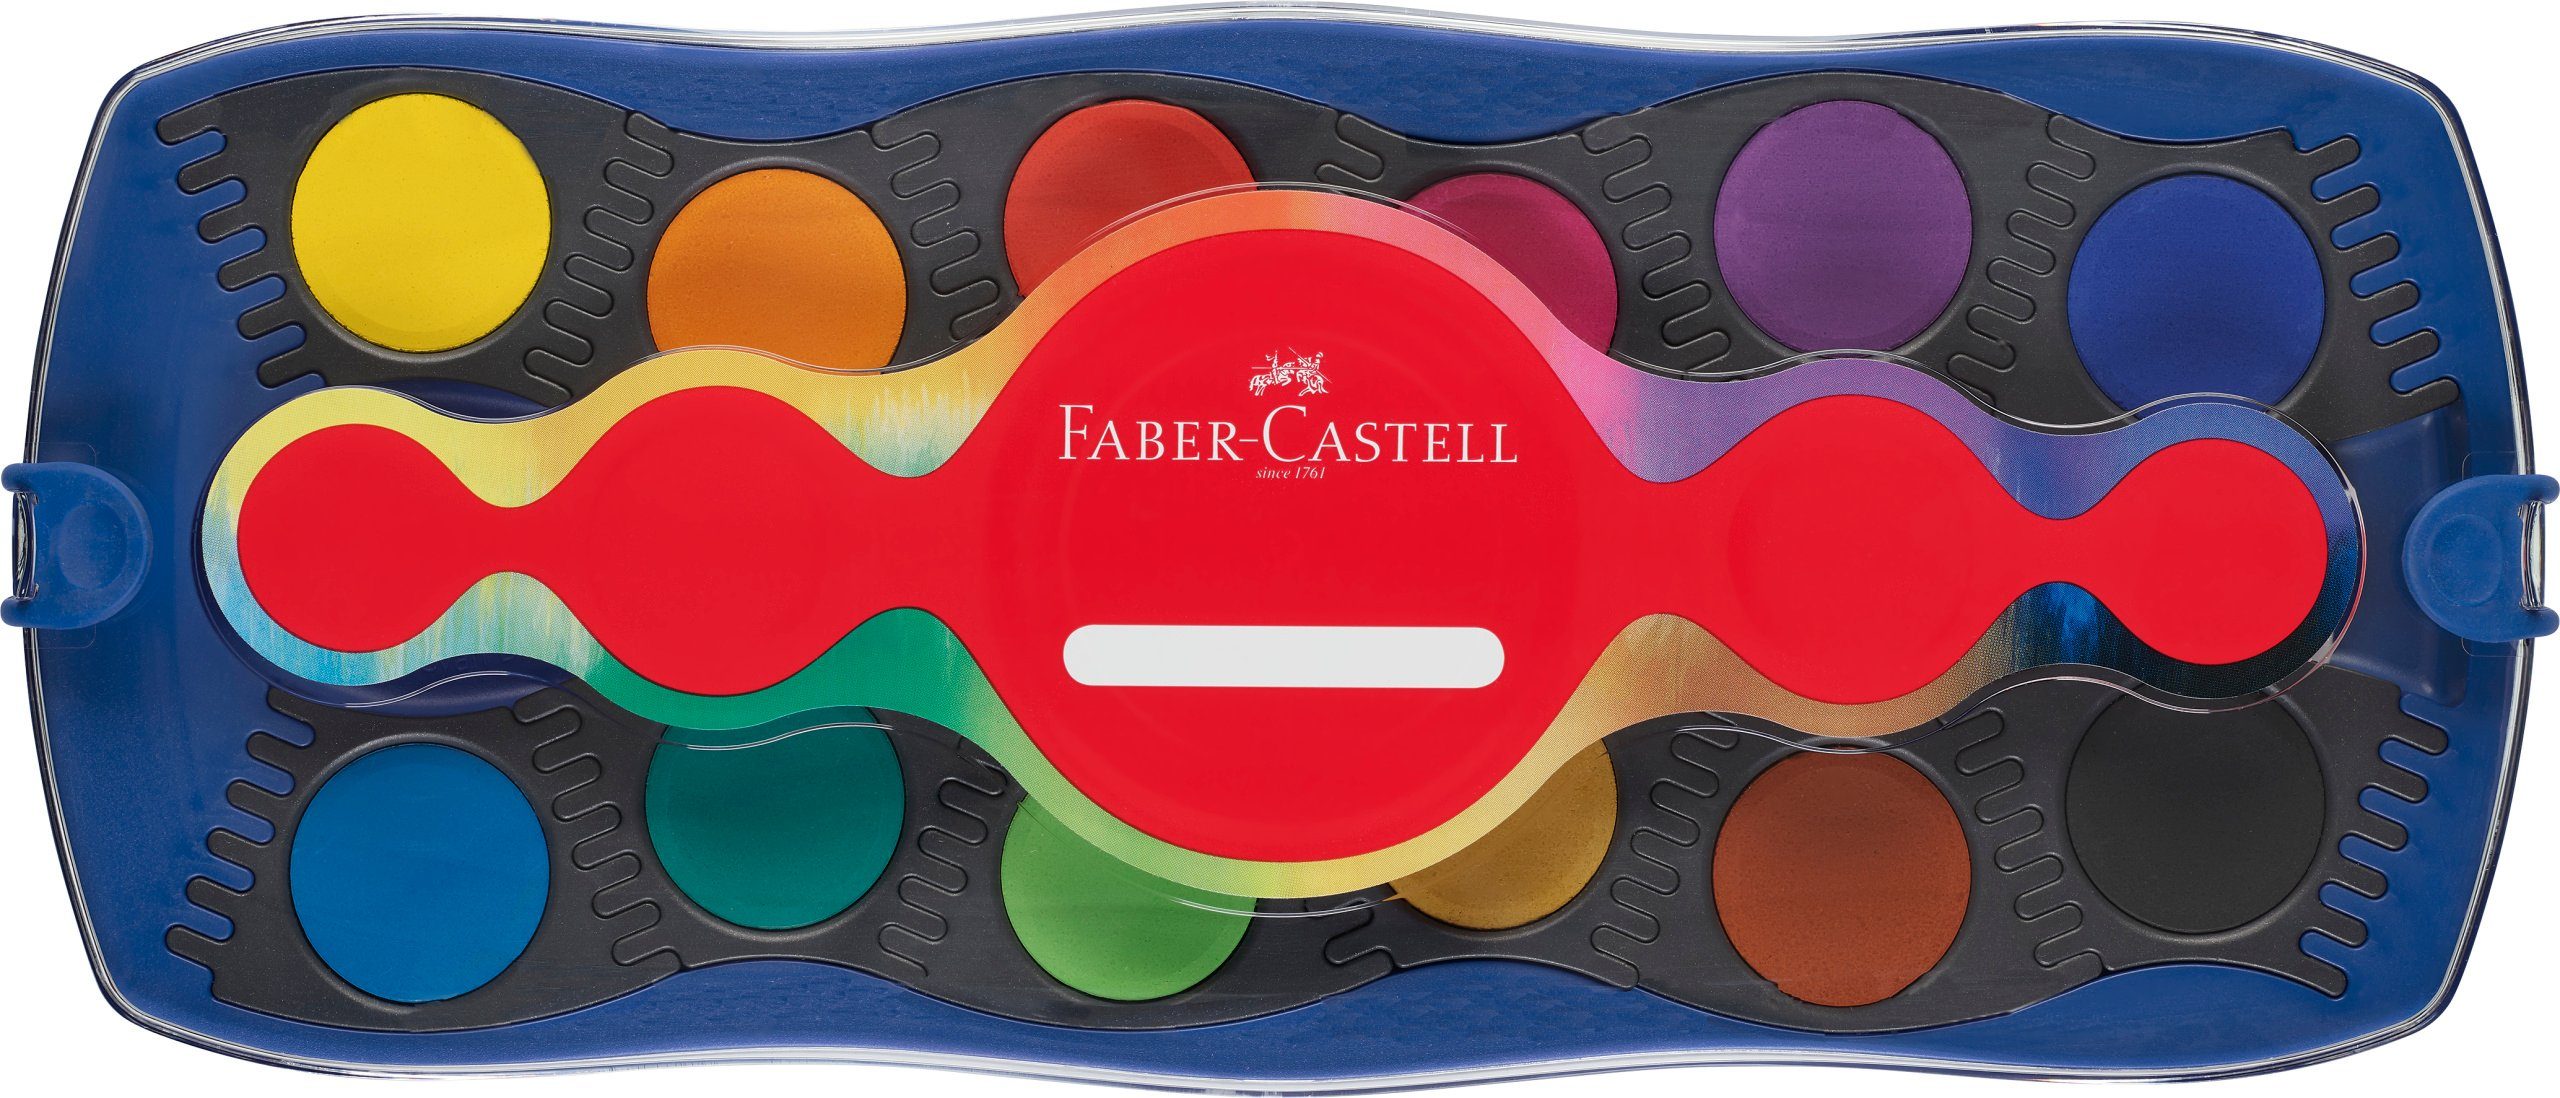 blau Farbkasten Faber-Castell Farben 24 Farbkasten Connector